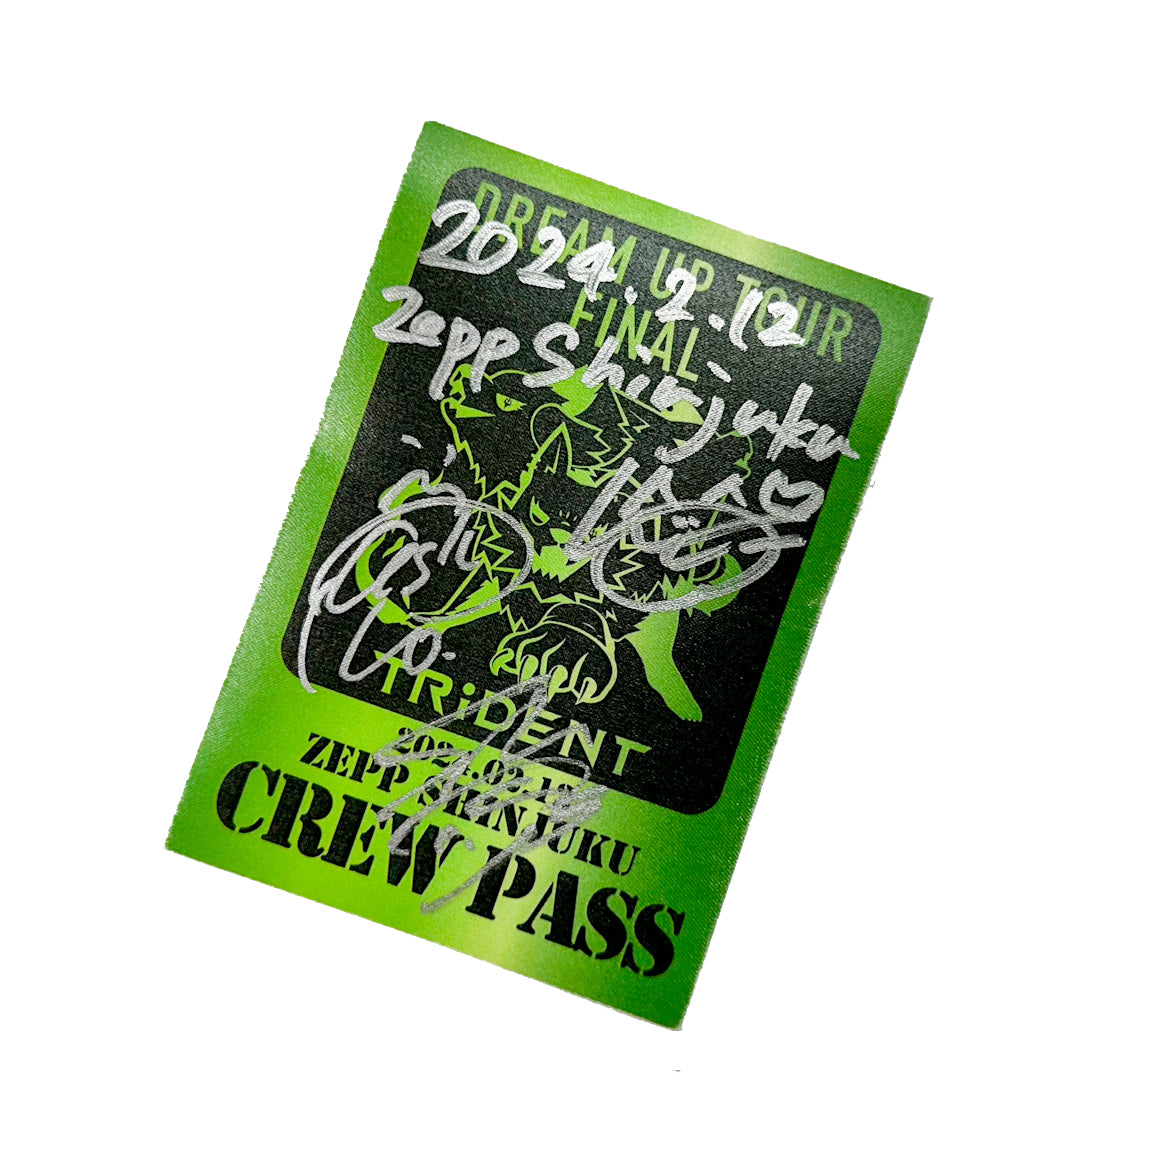 SIGNED TRIDENT CREW PASS (Dream Up TOUR)